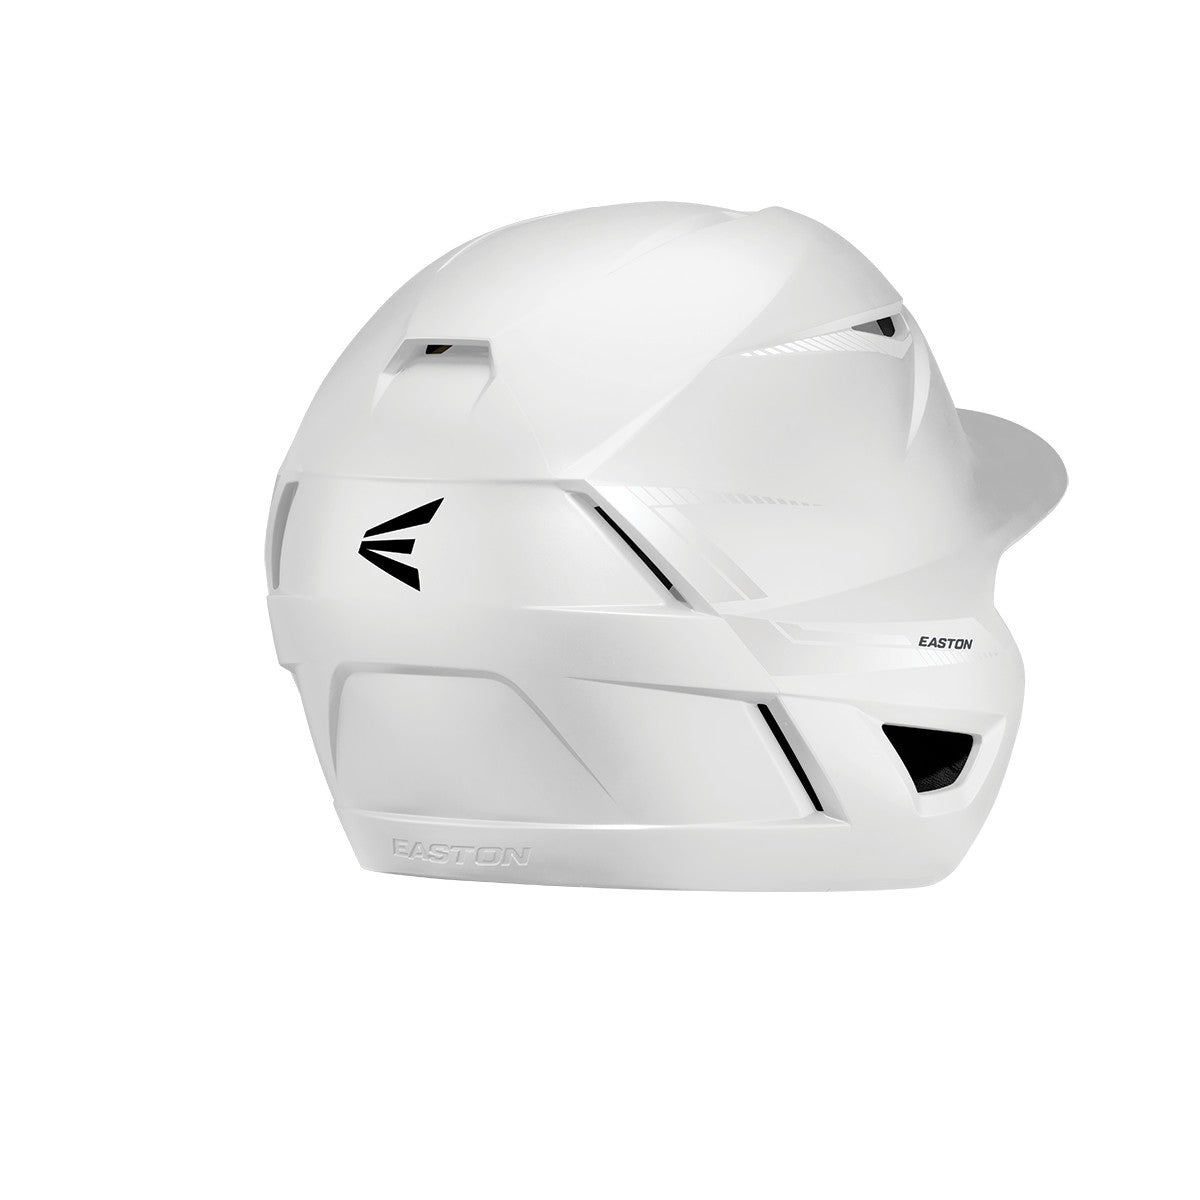 2023 Easton Pro Max Baseball Helmet with Universal Jaw Guard